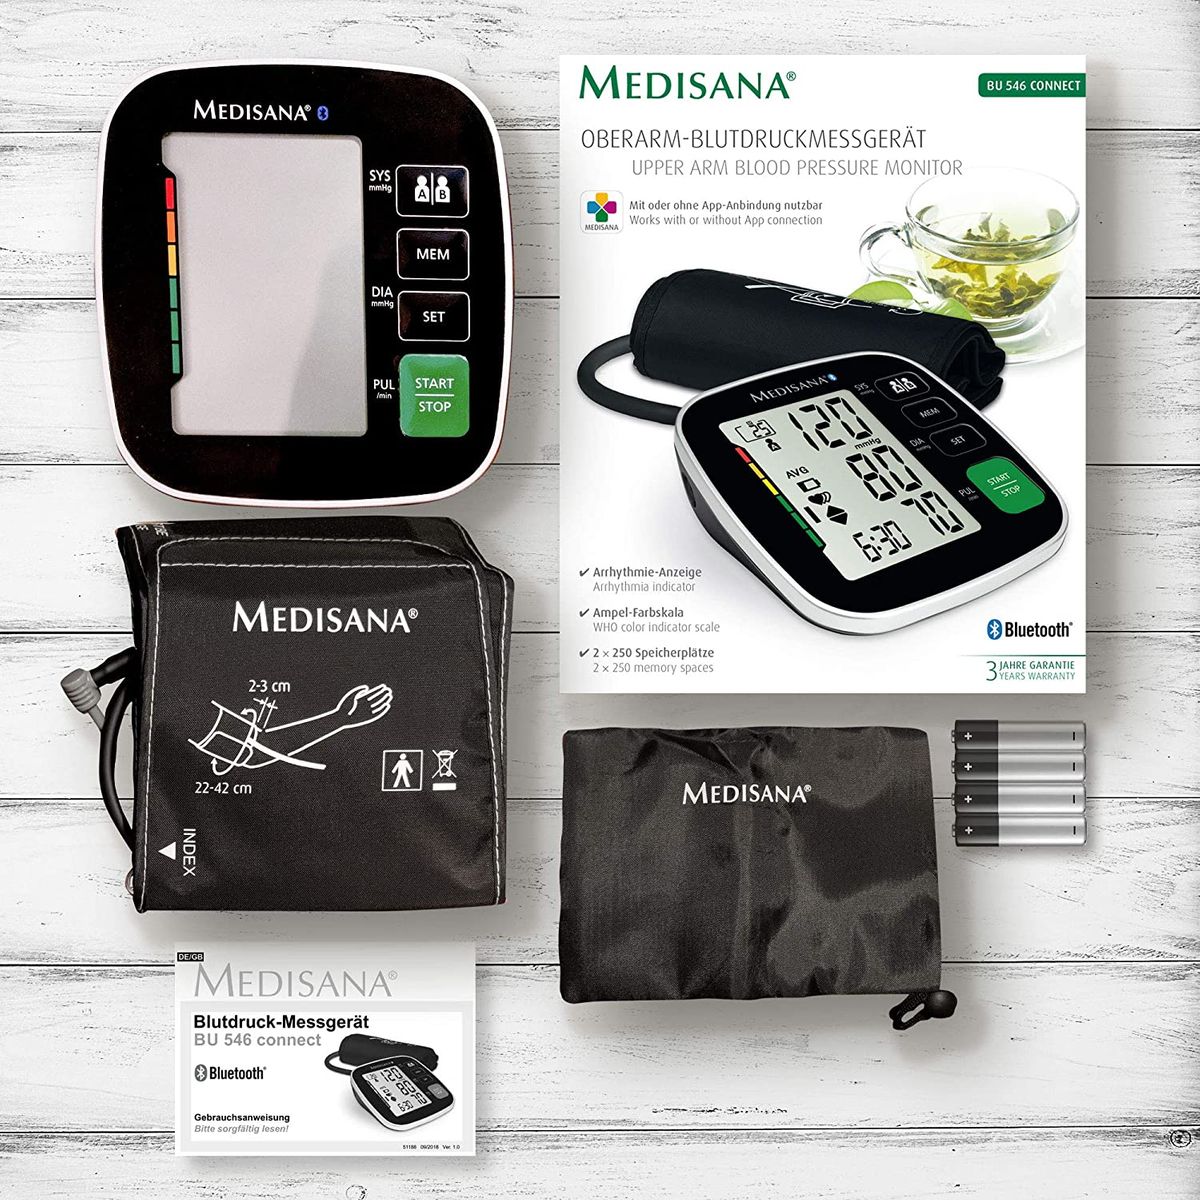 Medisana BU 546 connect upper arm blood pressure monitor with large cuff, arrhythmia display, Bluetooth